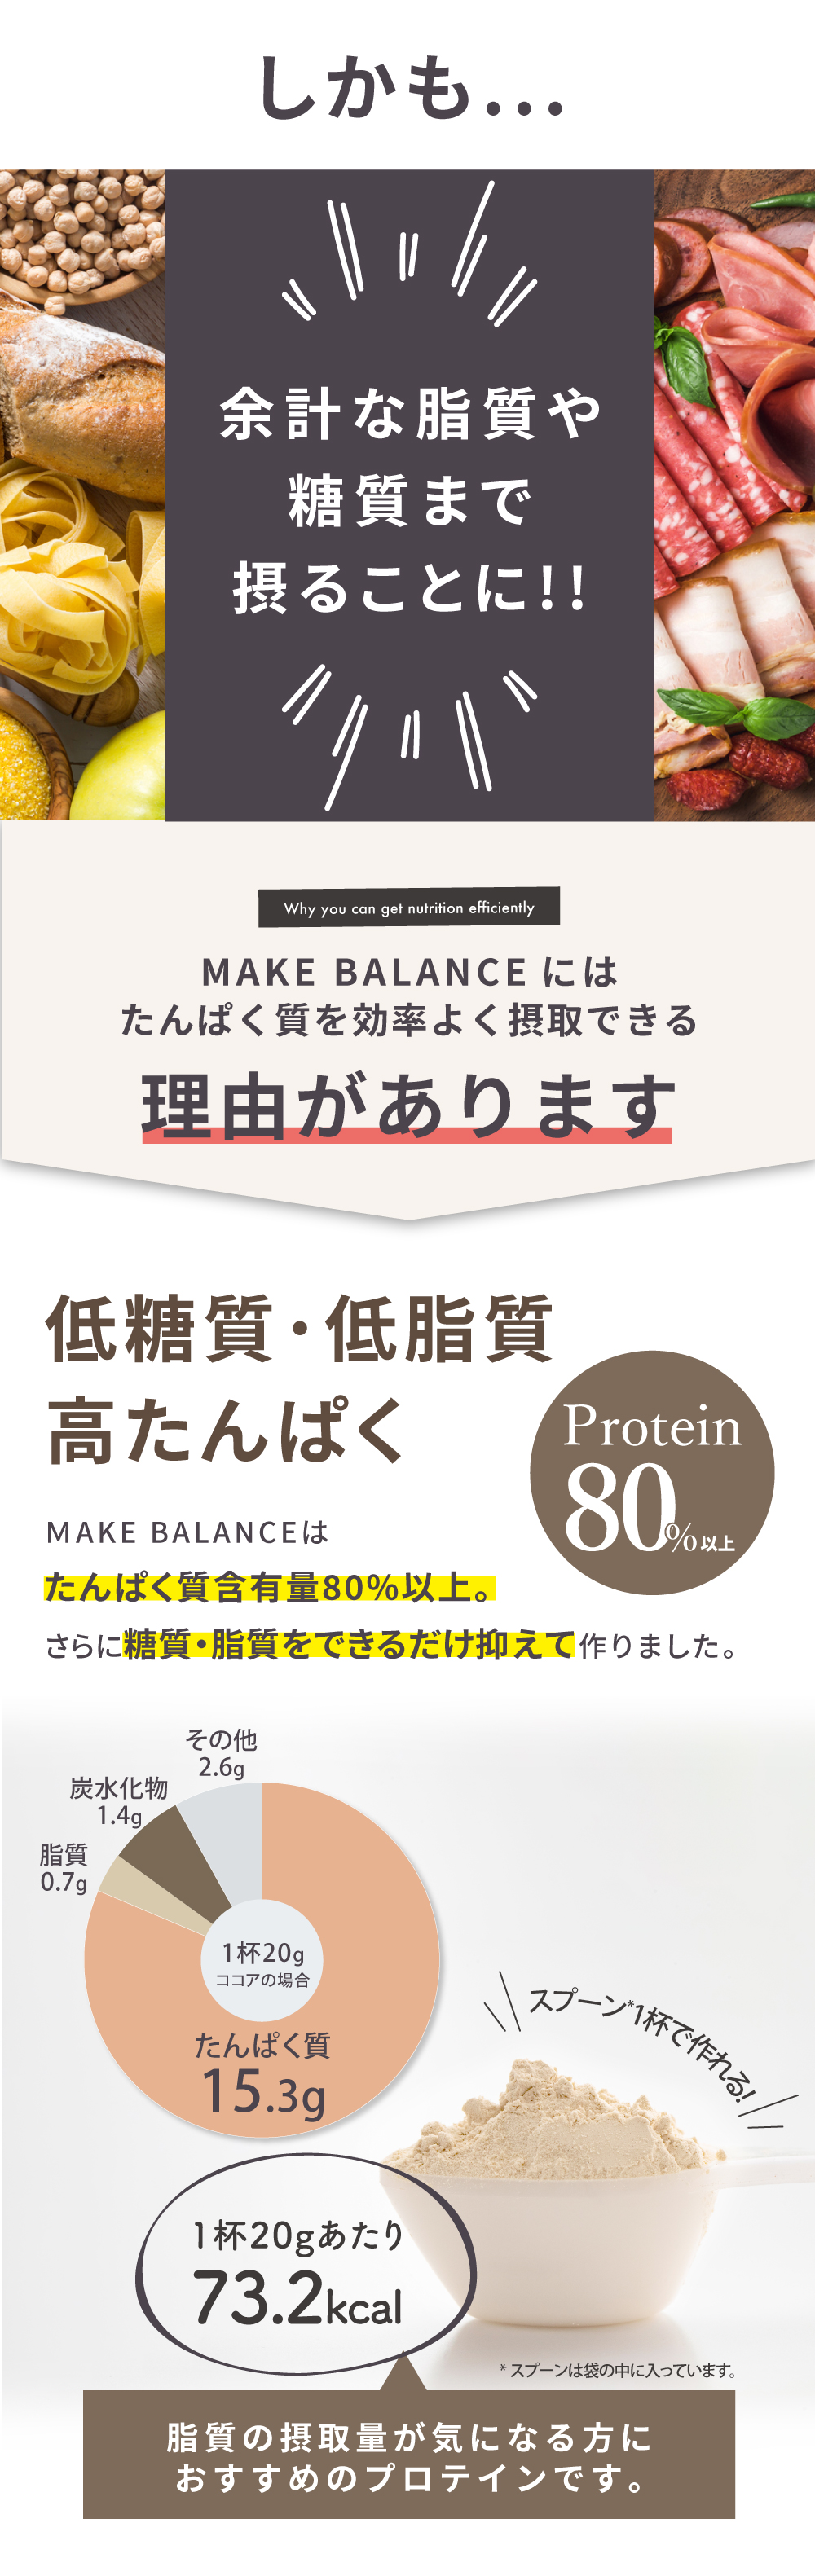 FIXIT ソイプロテイン プロテイン おきかえ ダイエット 女性 プロテイン 1kg 大豆 ココア 抹茶 乳酸菌 食物繊維 置き換え 健康 美容 送料無料 MAKE BALANCE メイクバランス 